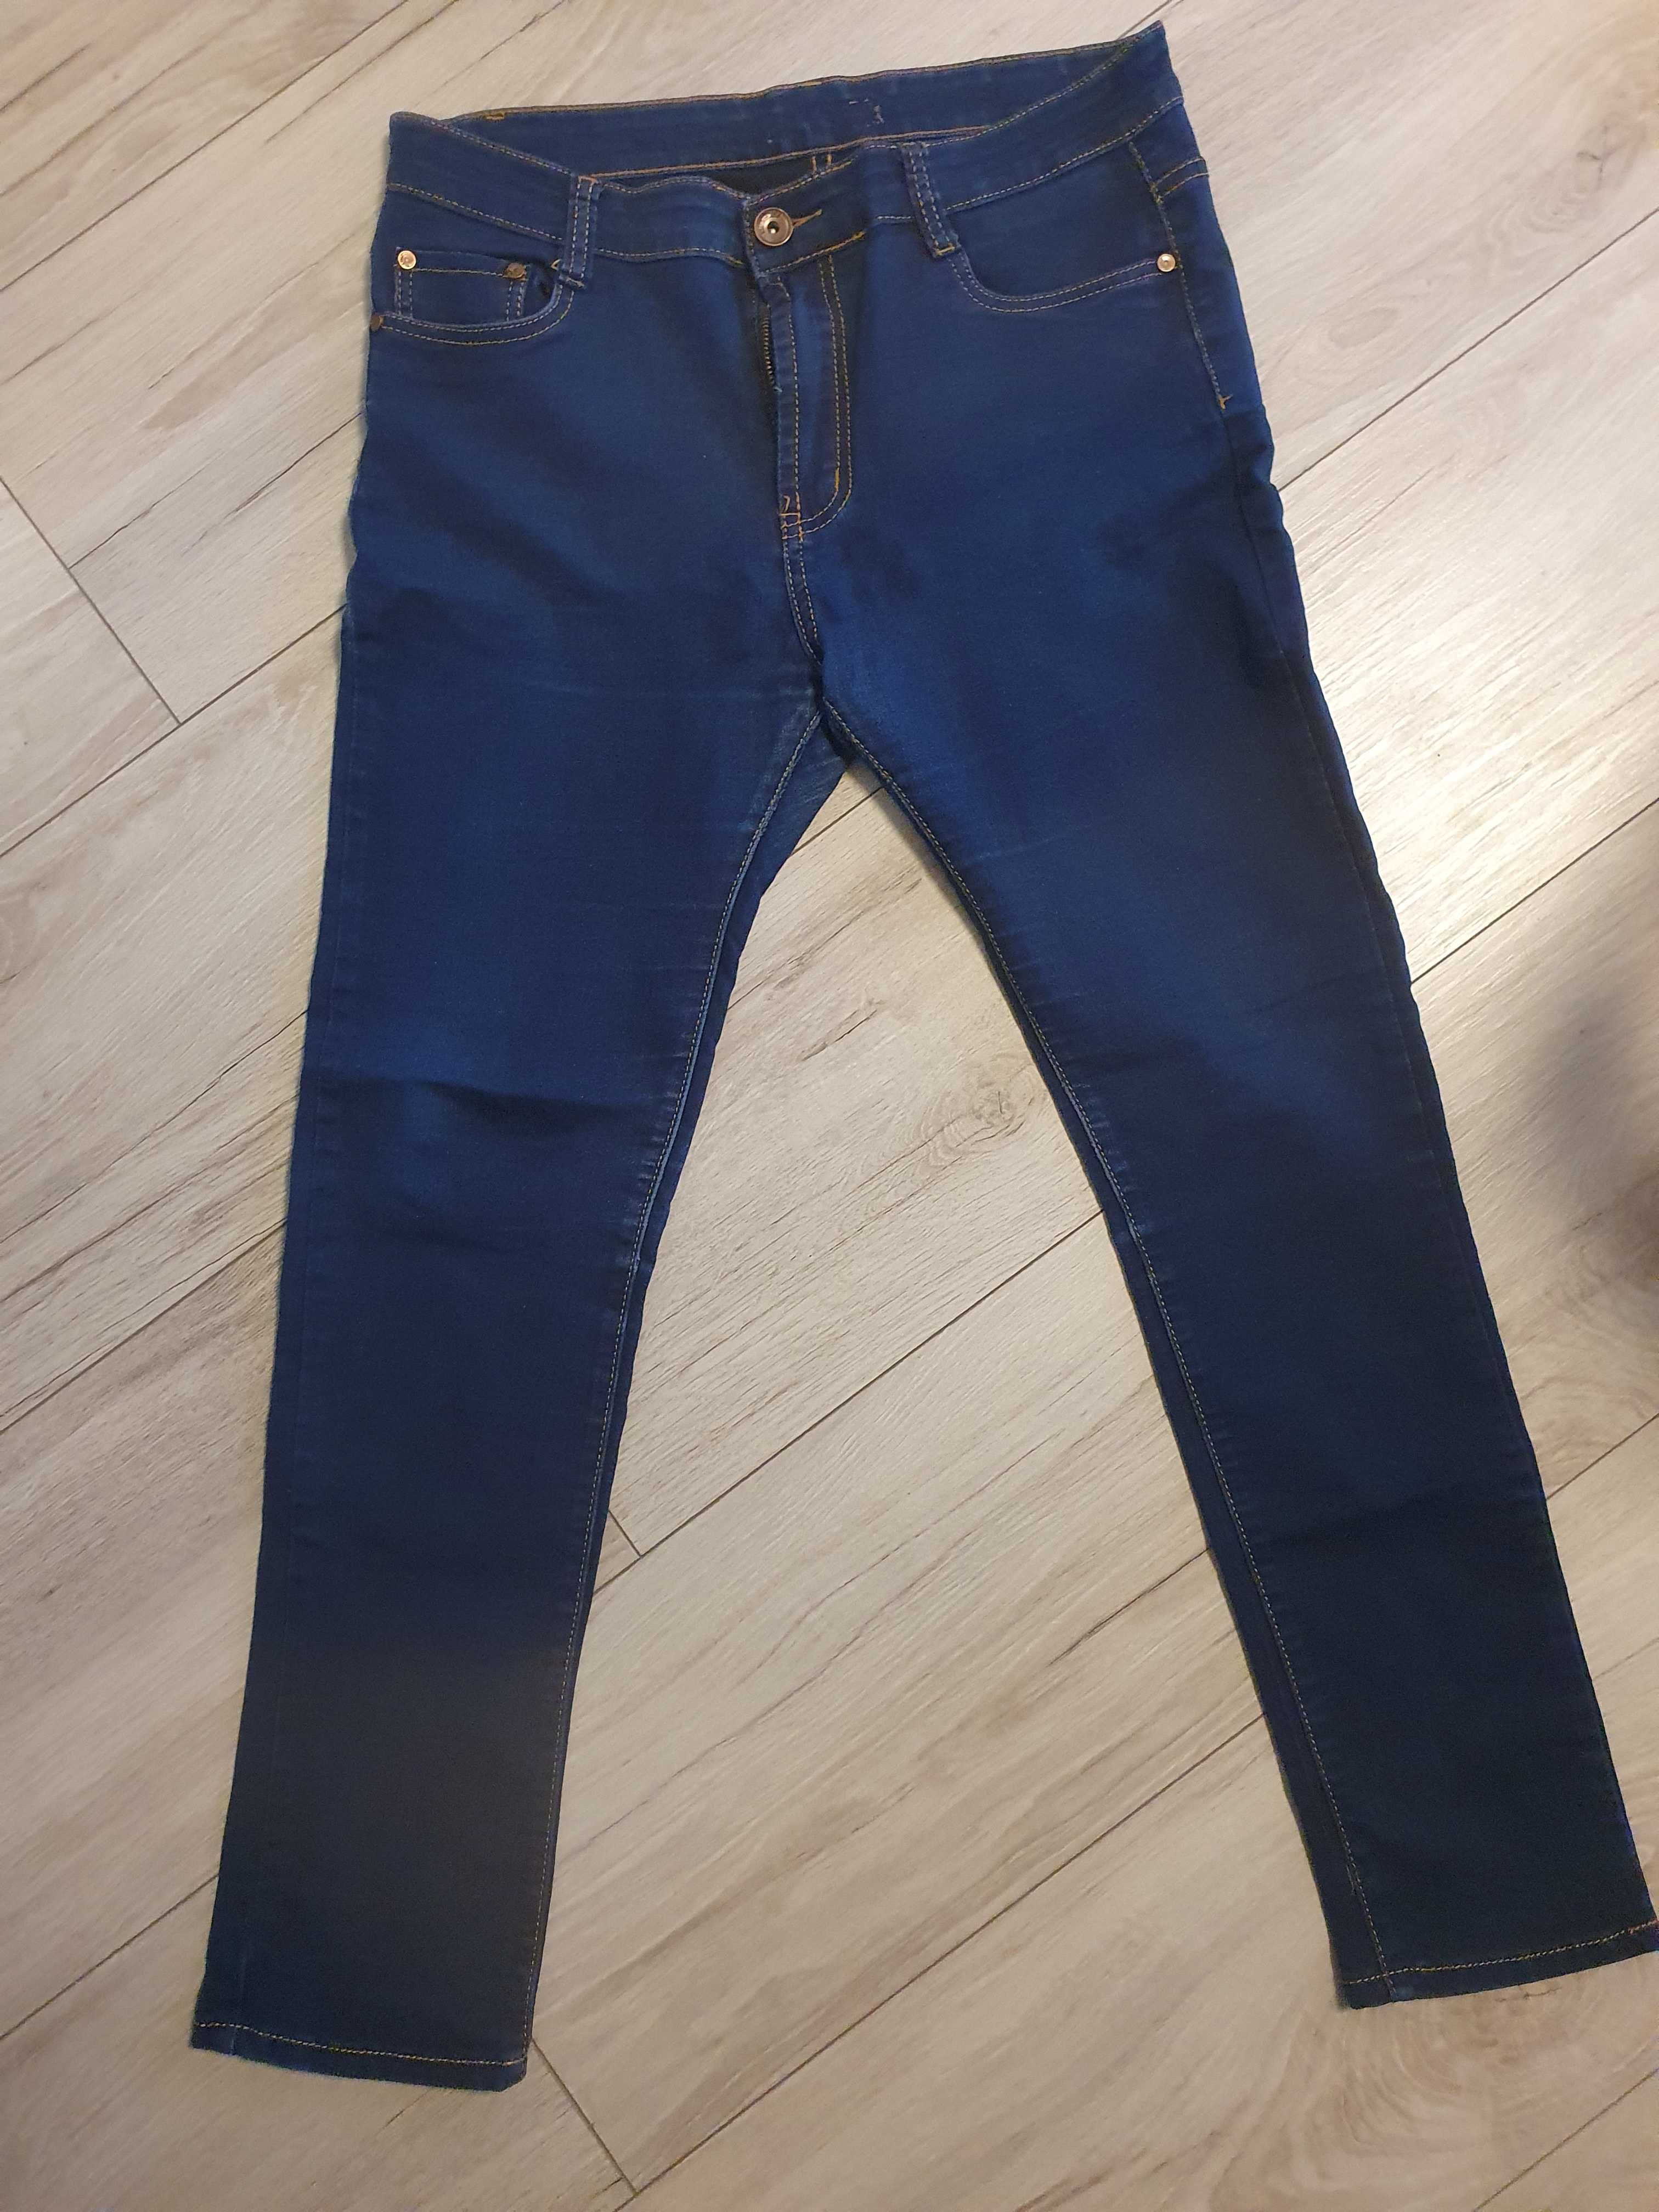 Spodnie damskie jeans rozmiar 44